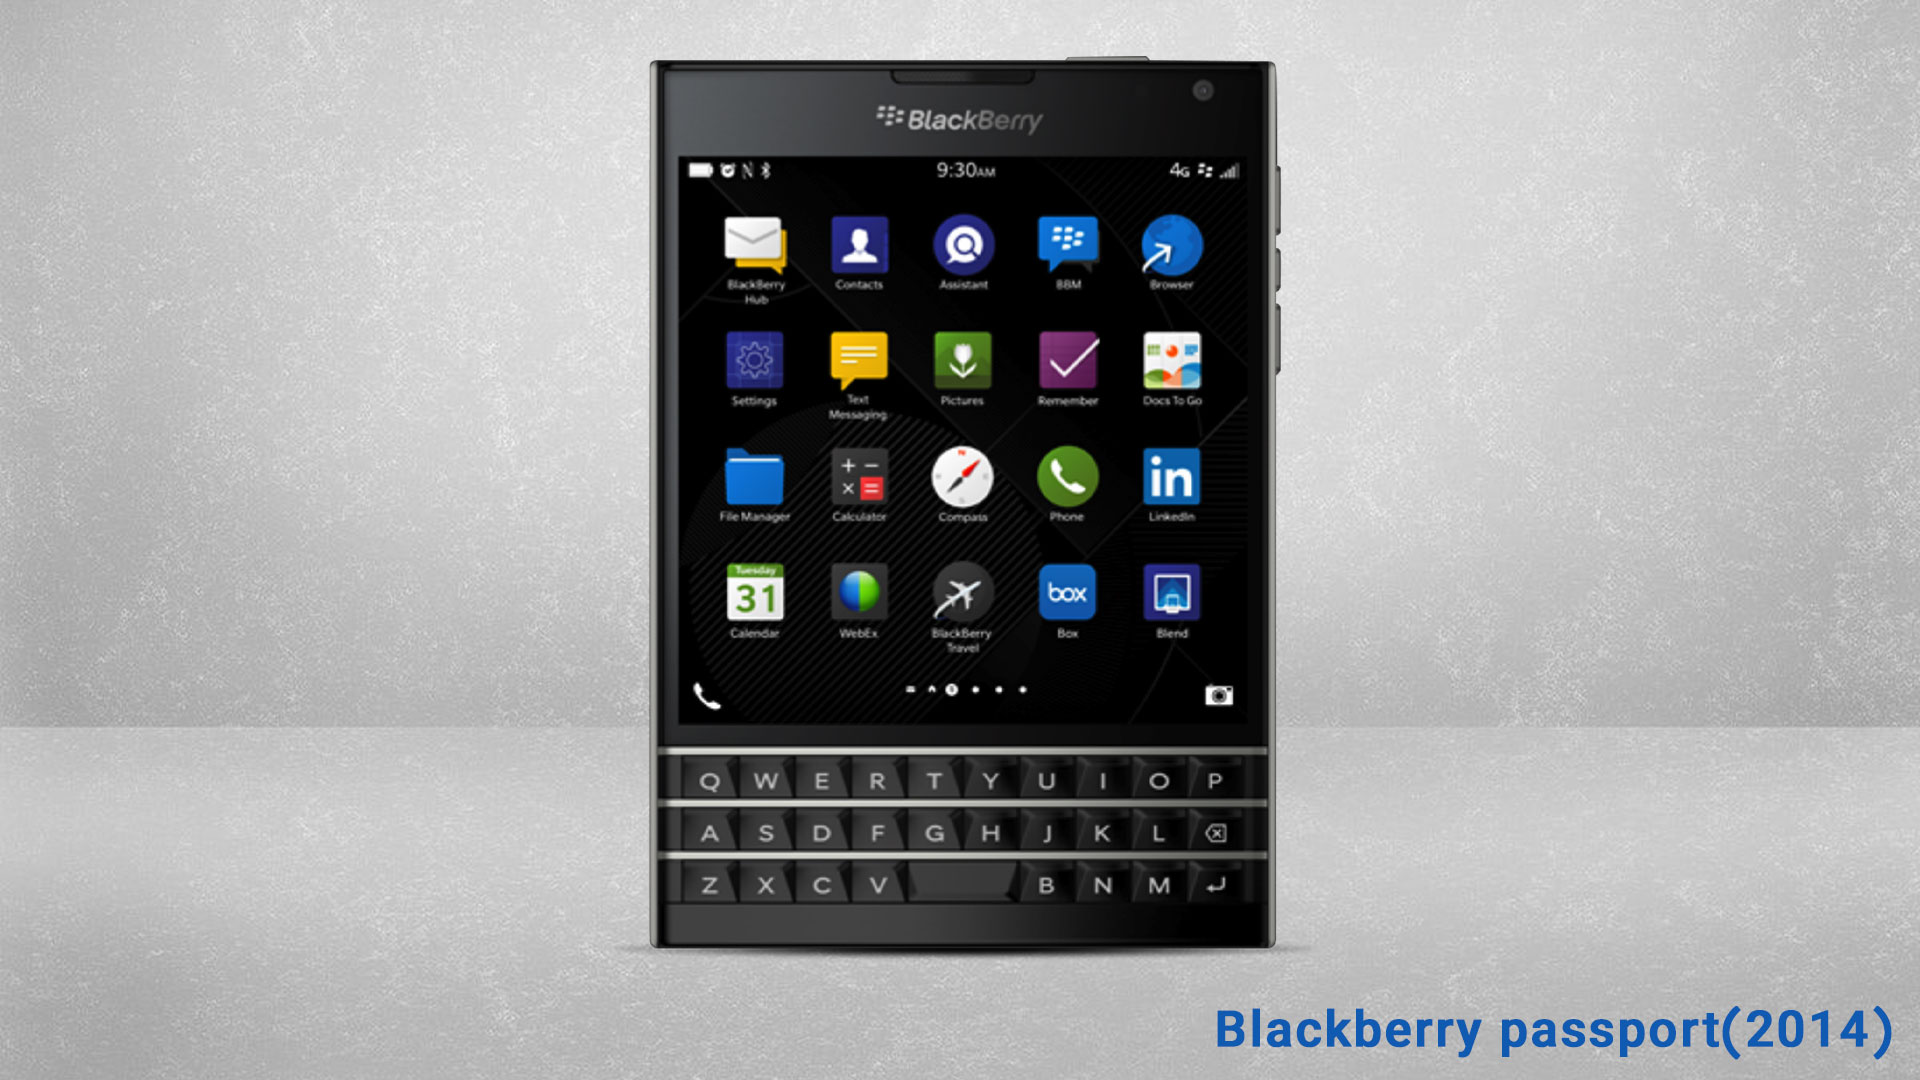 Blackberry passport(2014) 